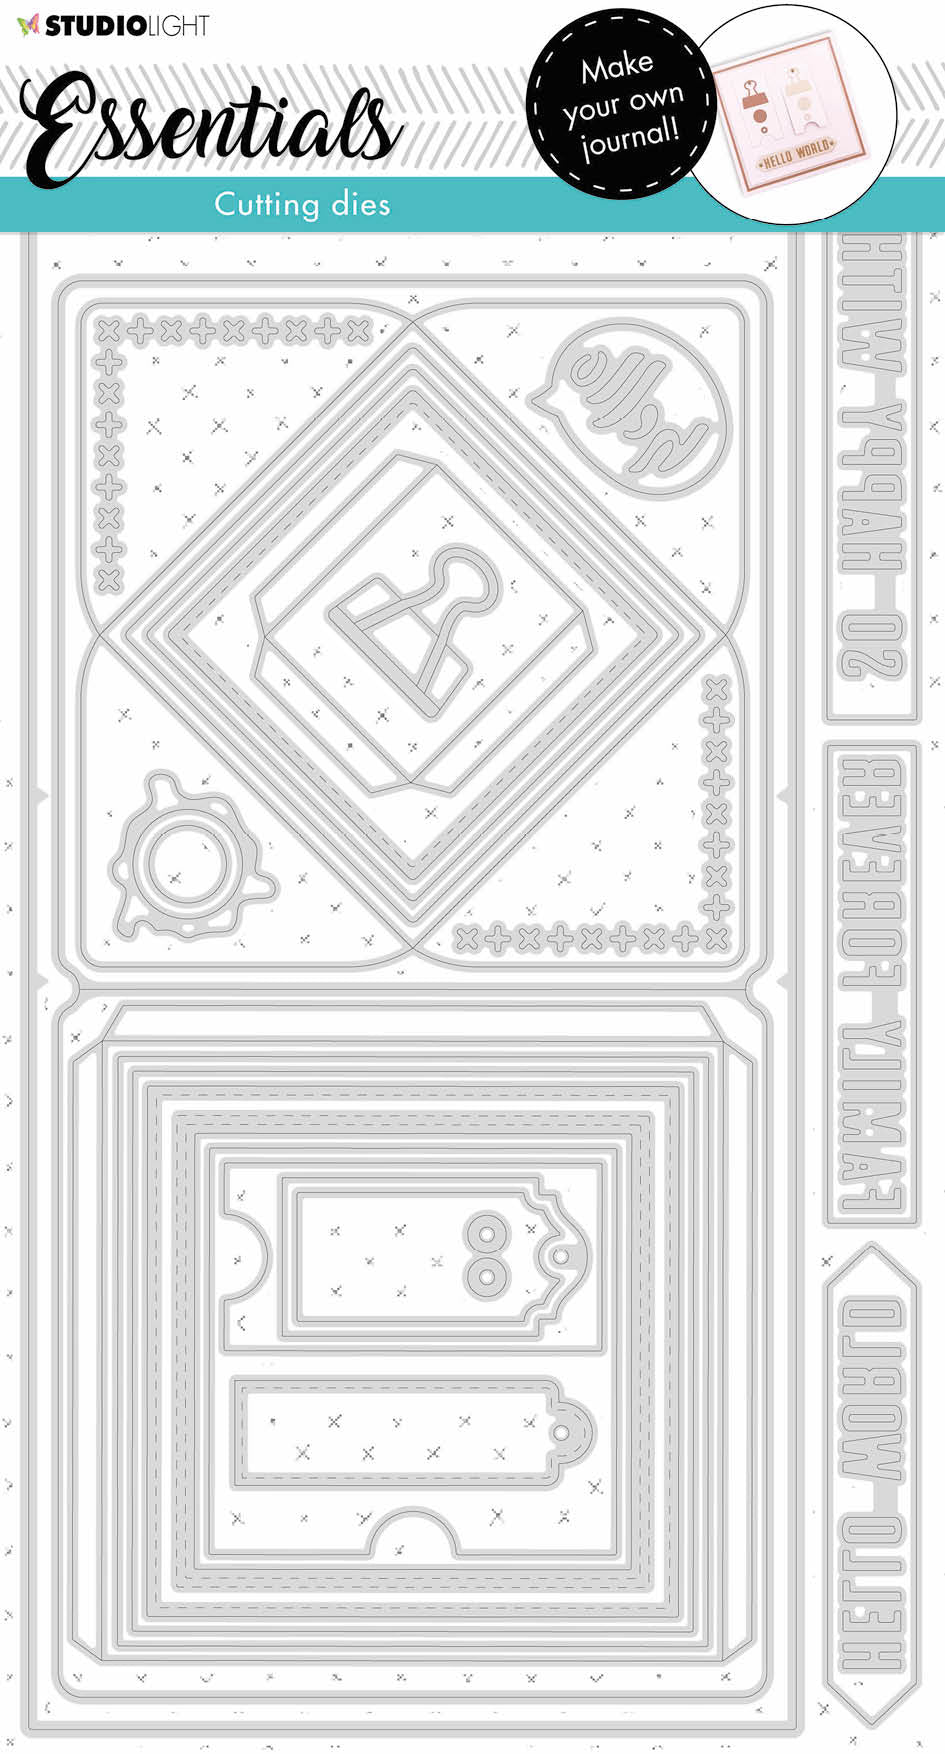 SL Cutting Die Square Journal Essentials 288x153x1mm 1 PC nr.163